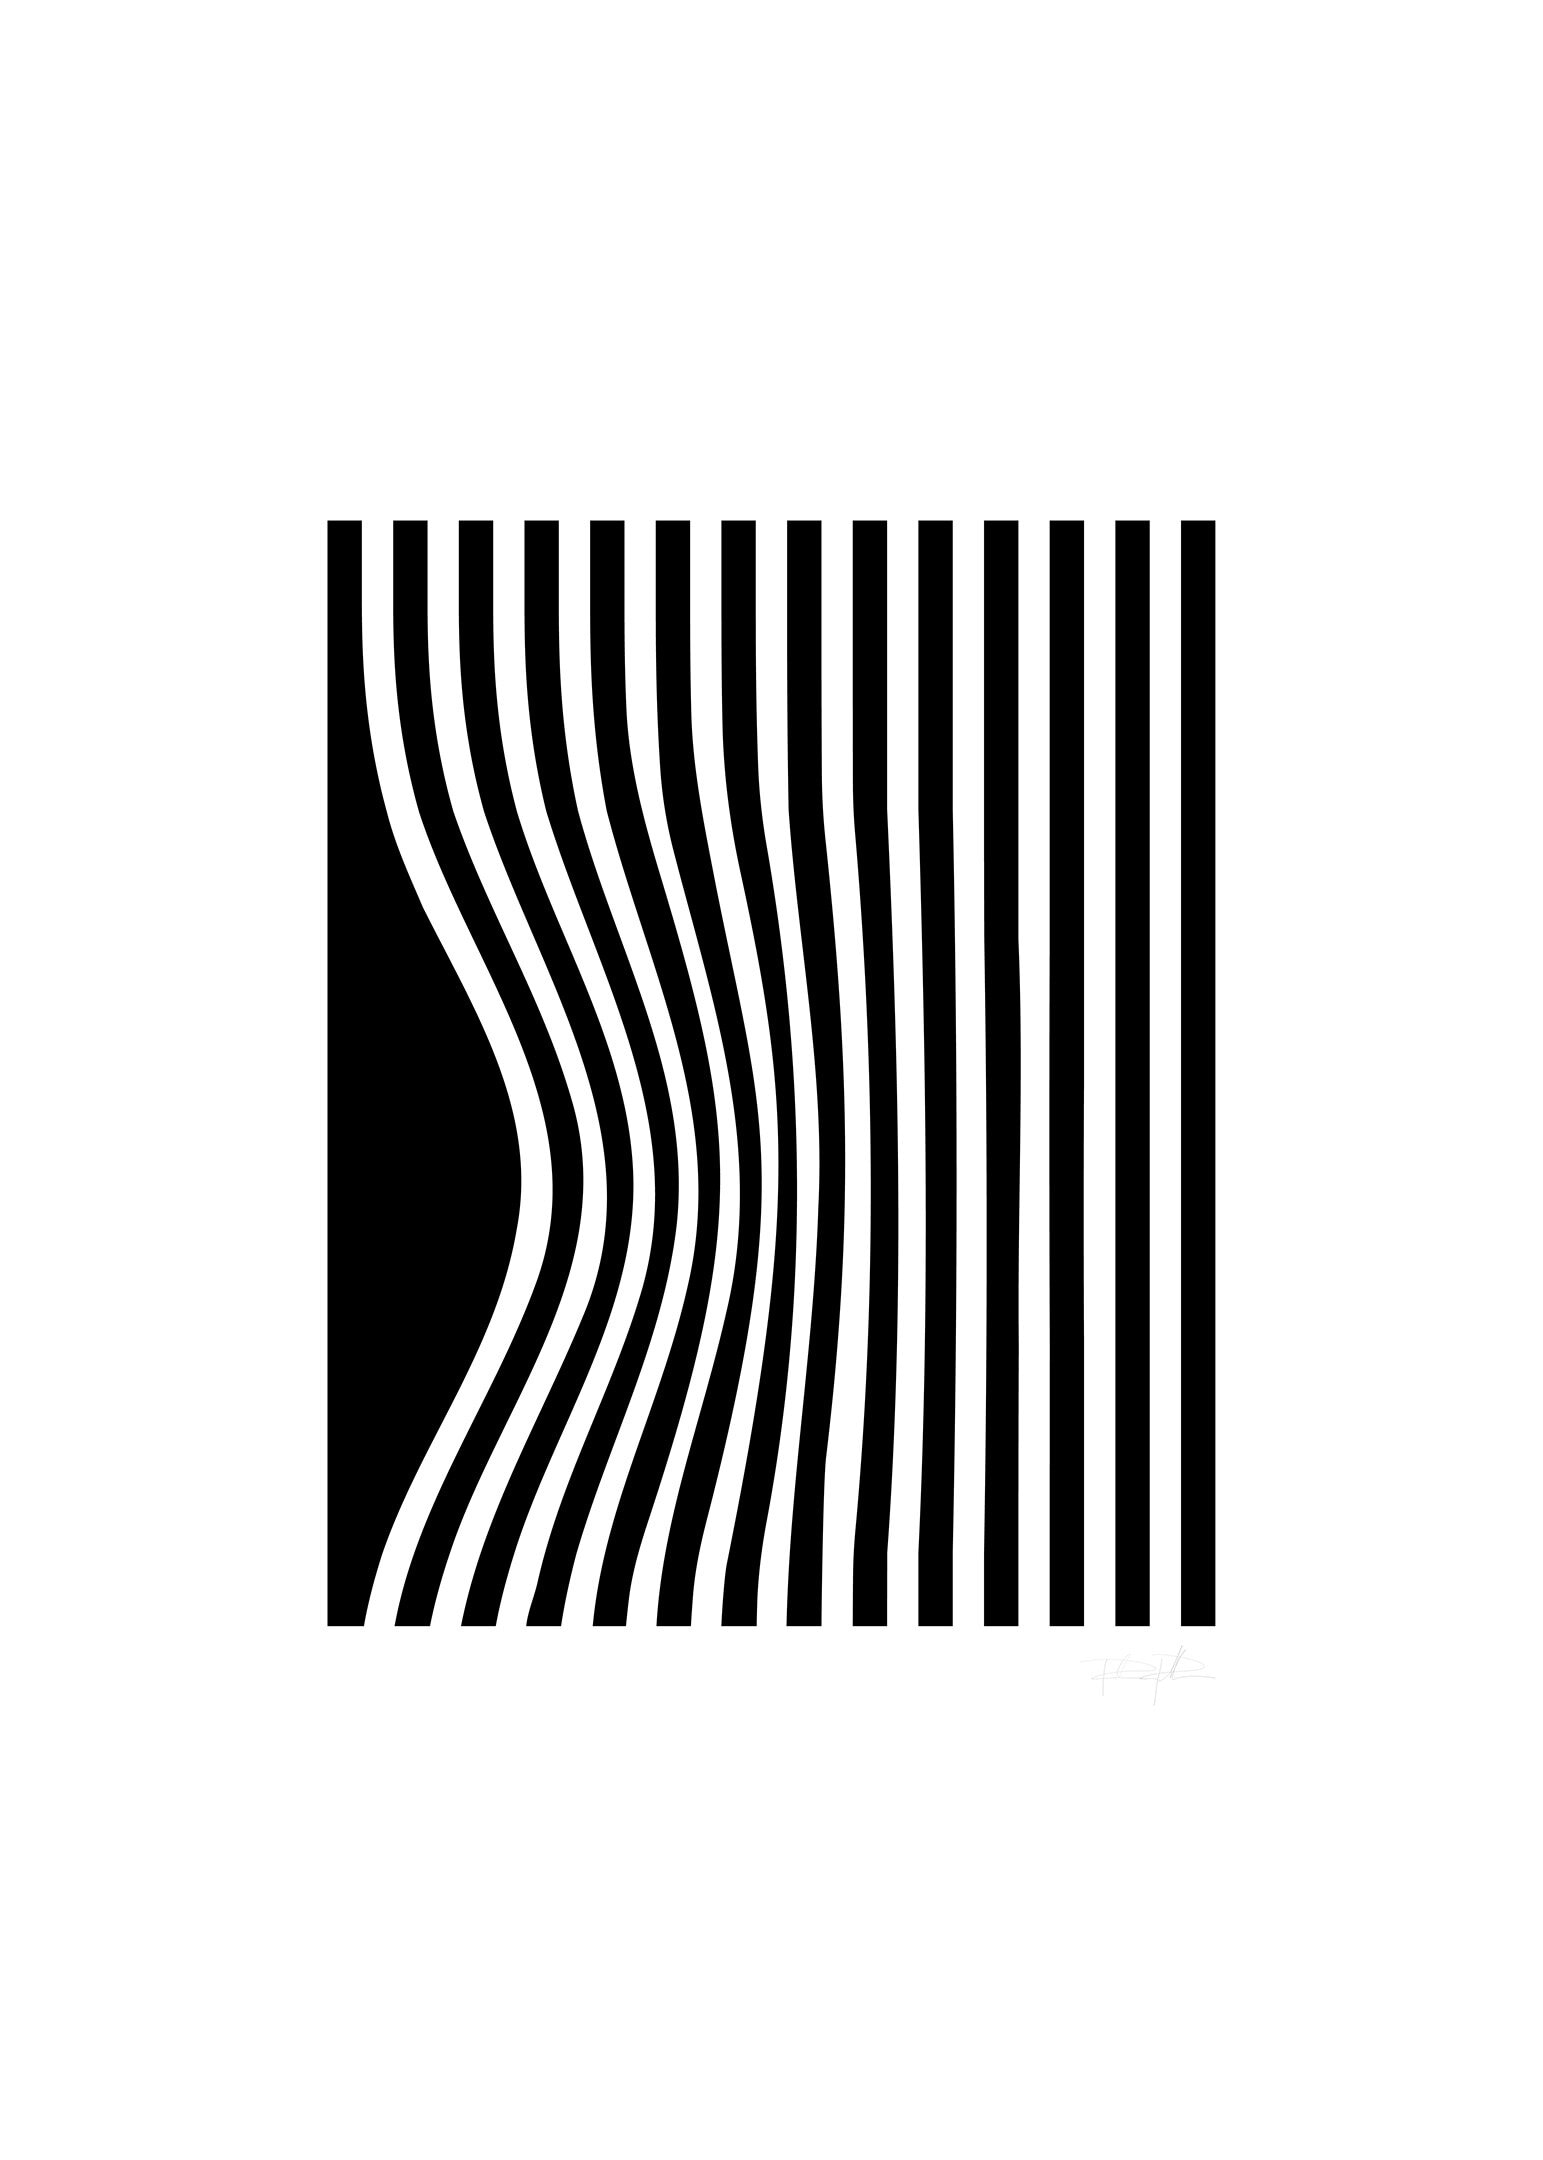 Graphic illusion poster black